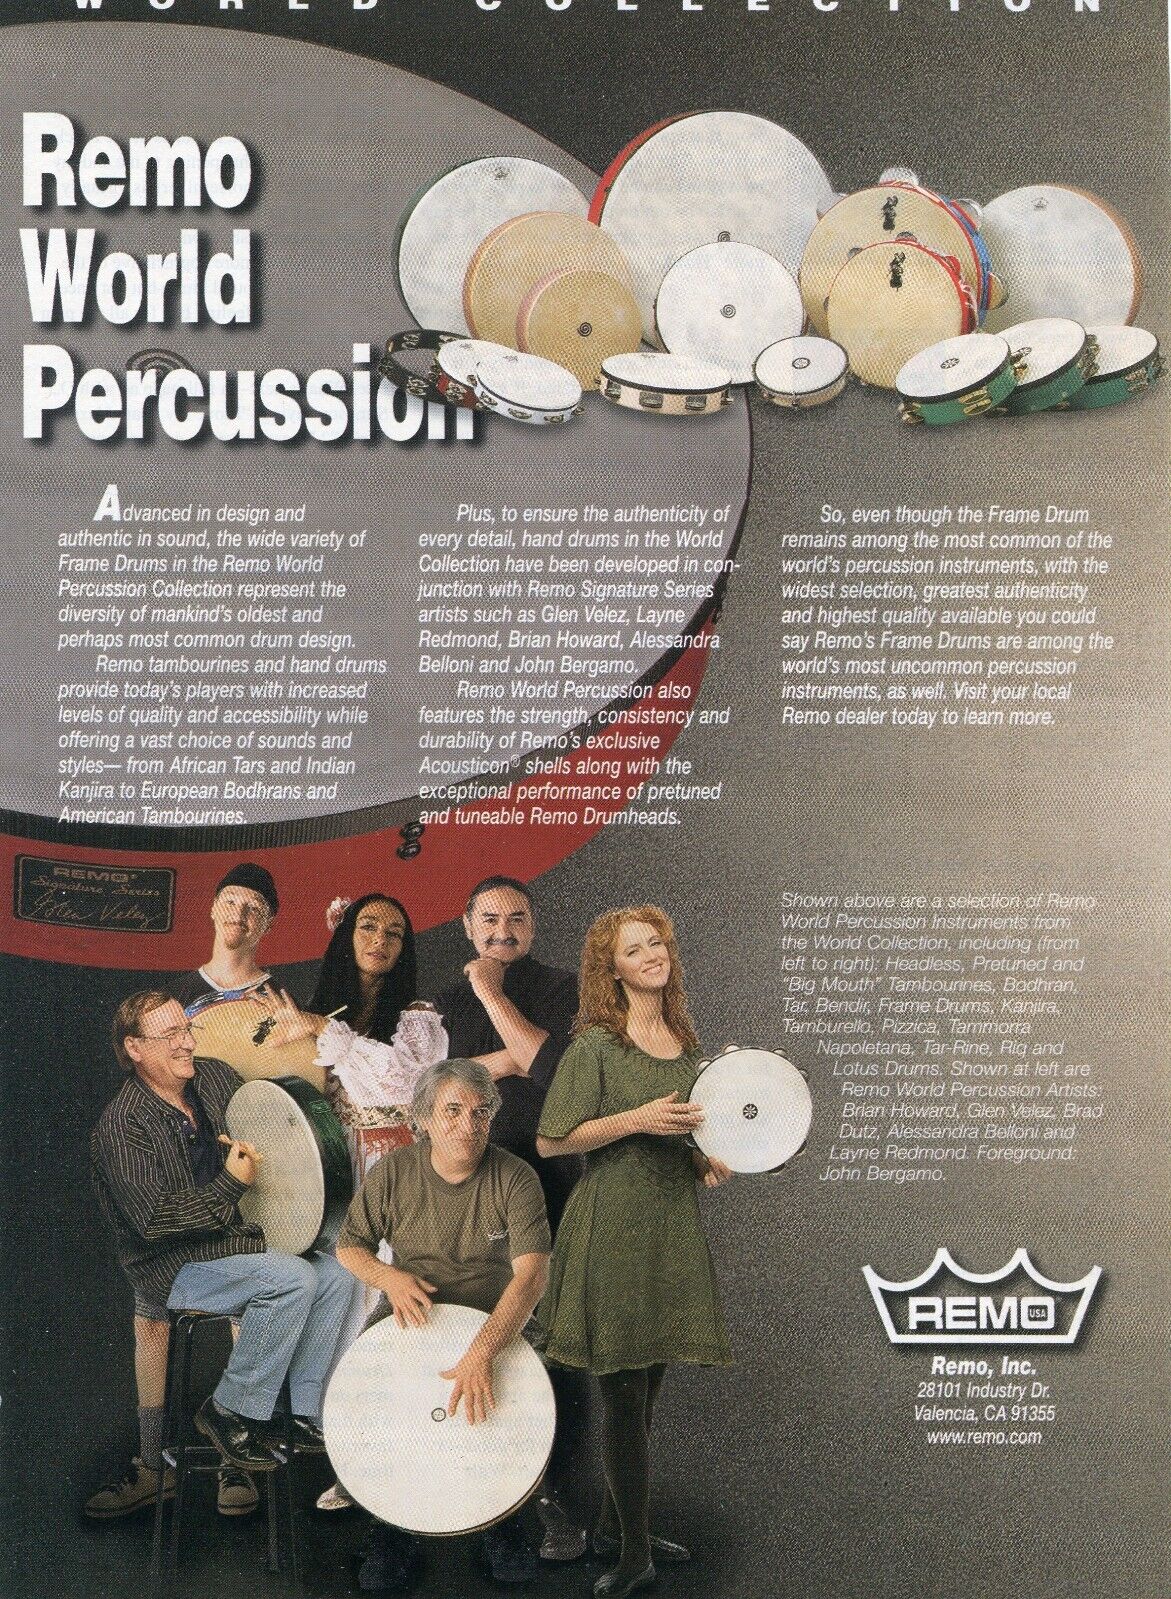 1999 Print Ad of Remo World Percussion w Brian Howard, Glen Velez, Brad Dutz